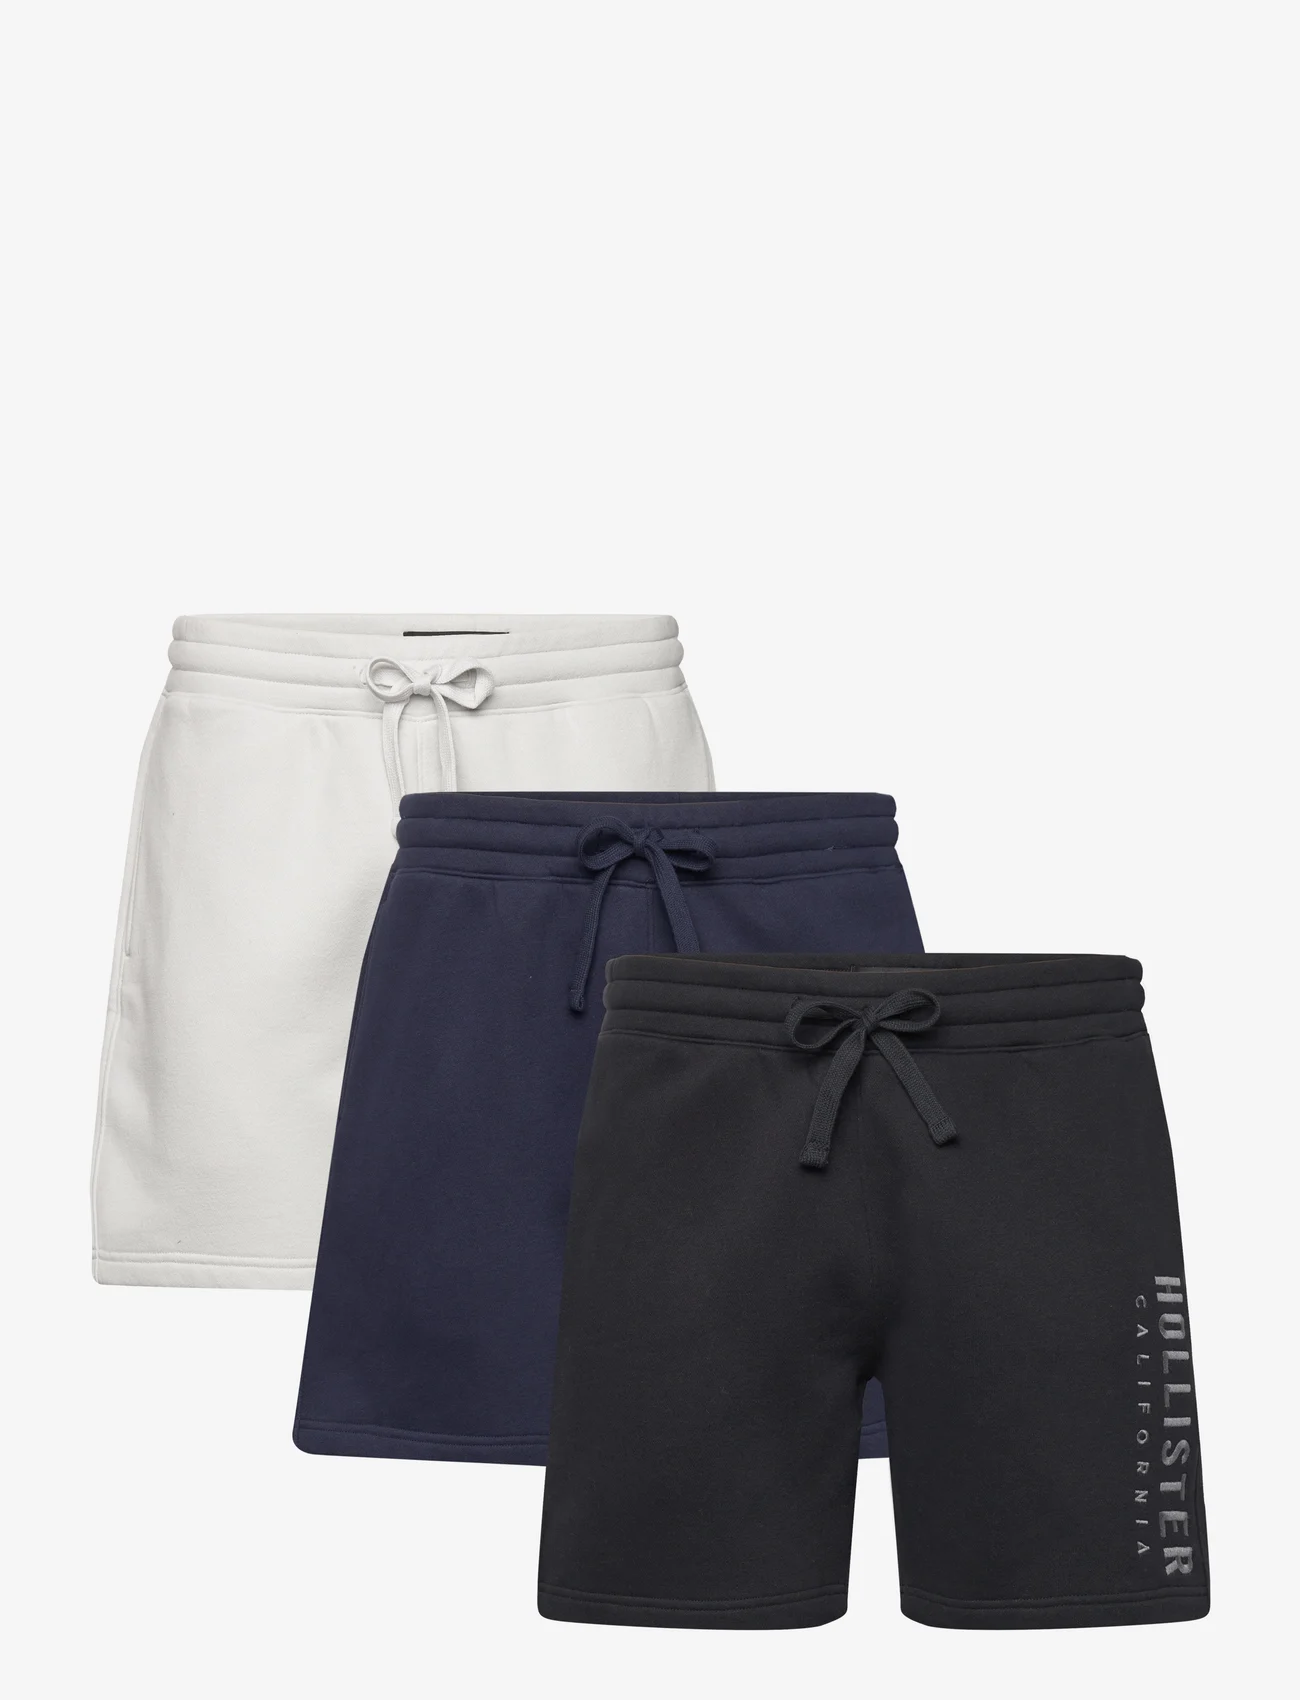 Hollister - HCo. GUYS SHORTS - casual shorts - 3 pack tech logo - 0